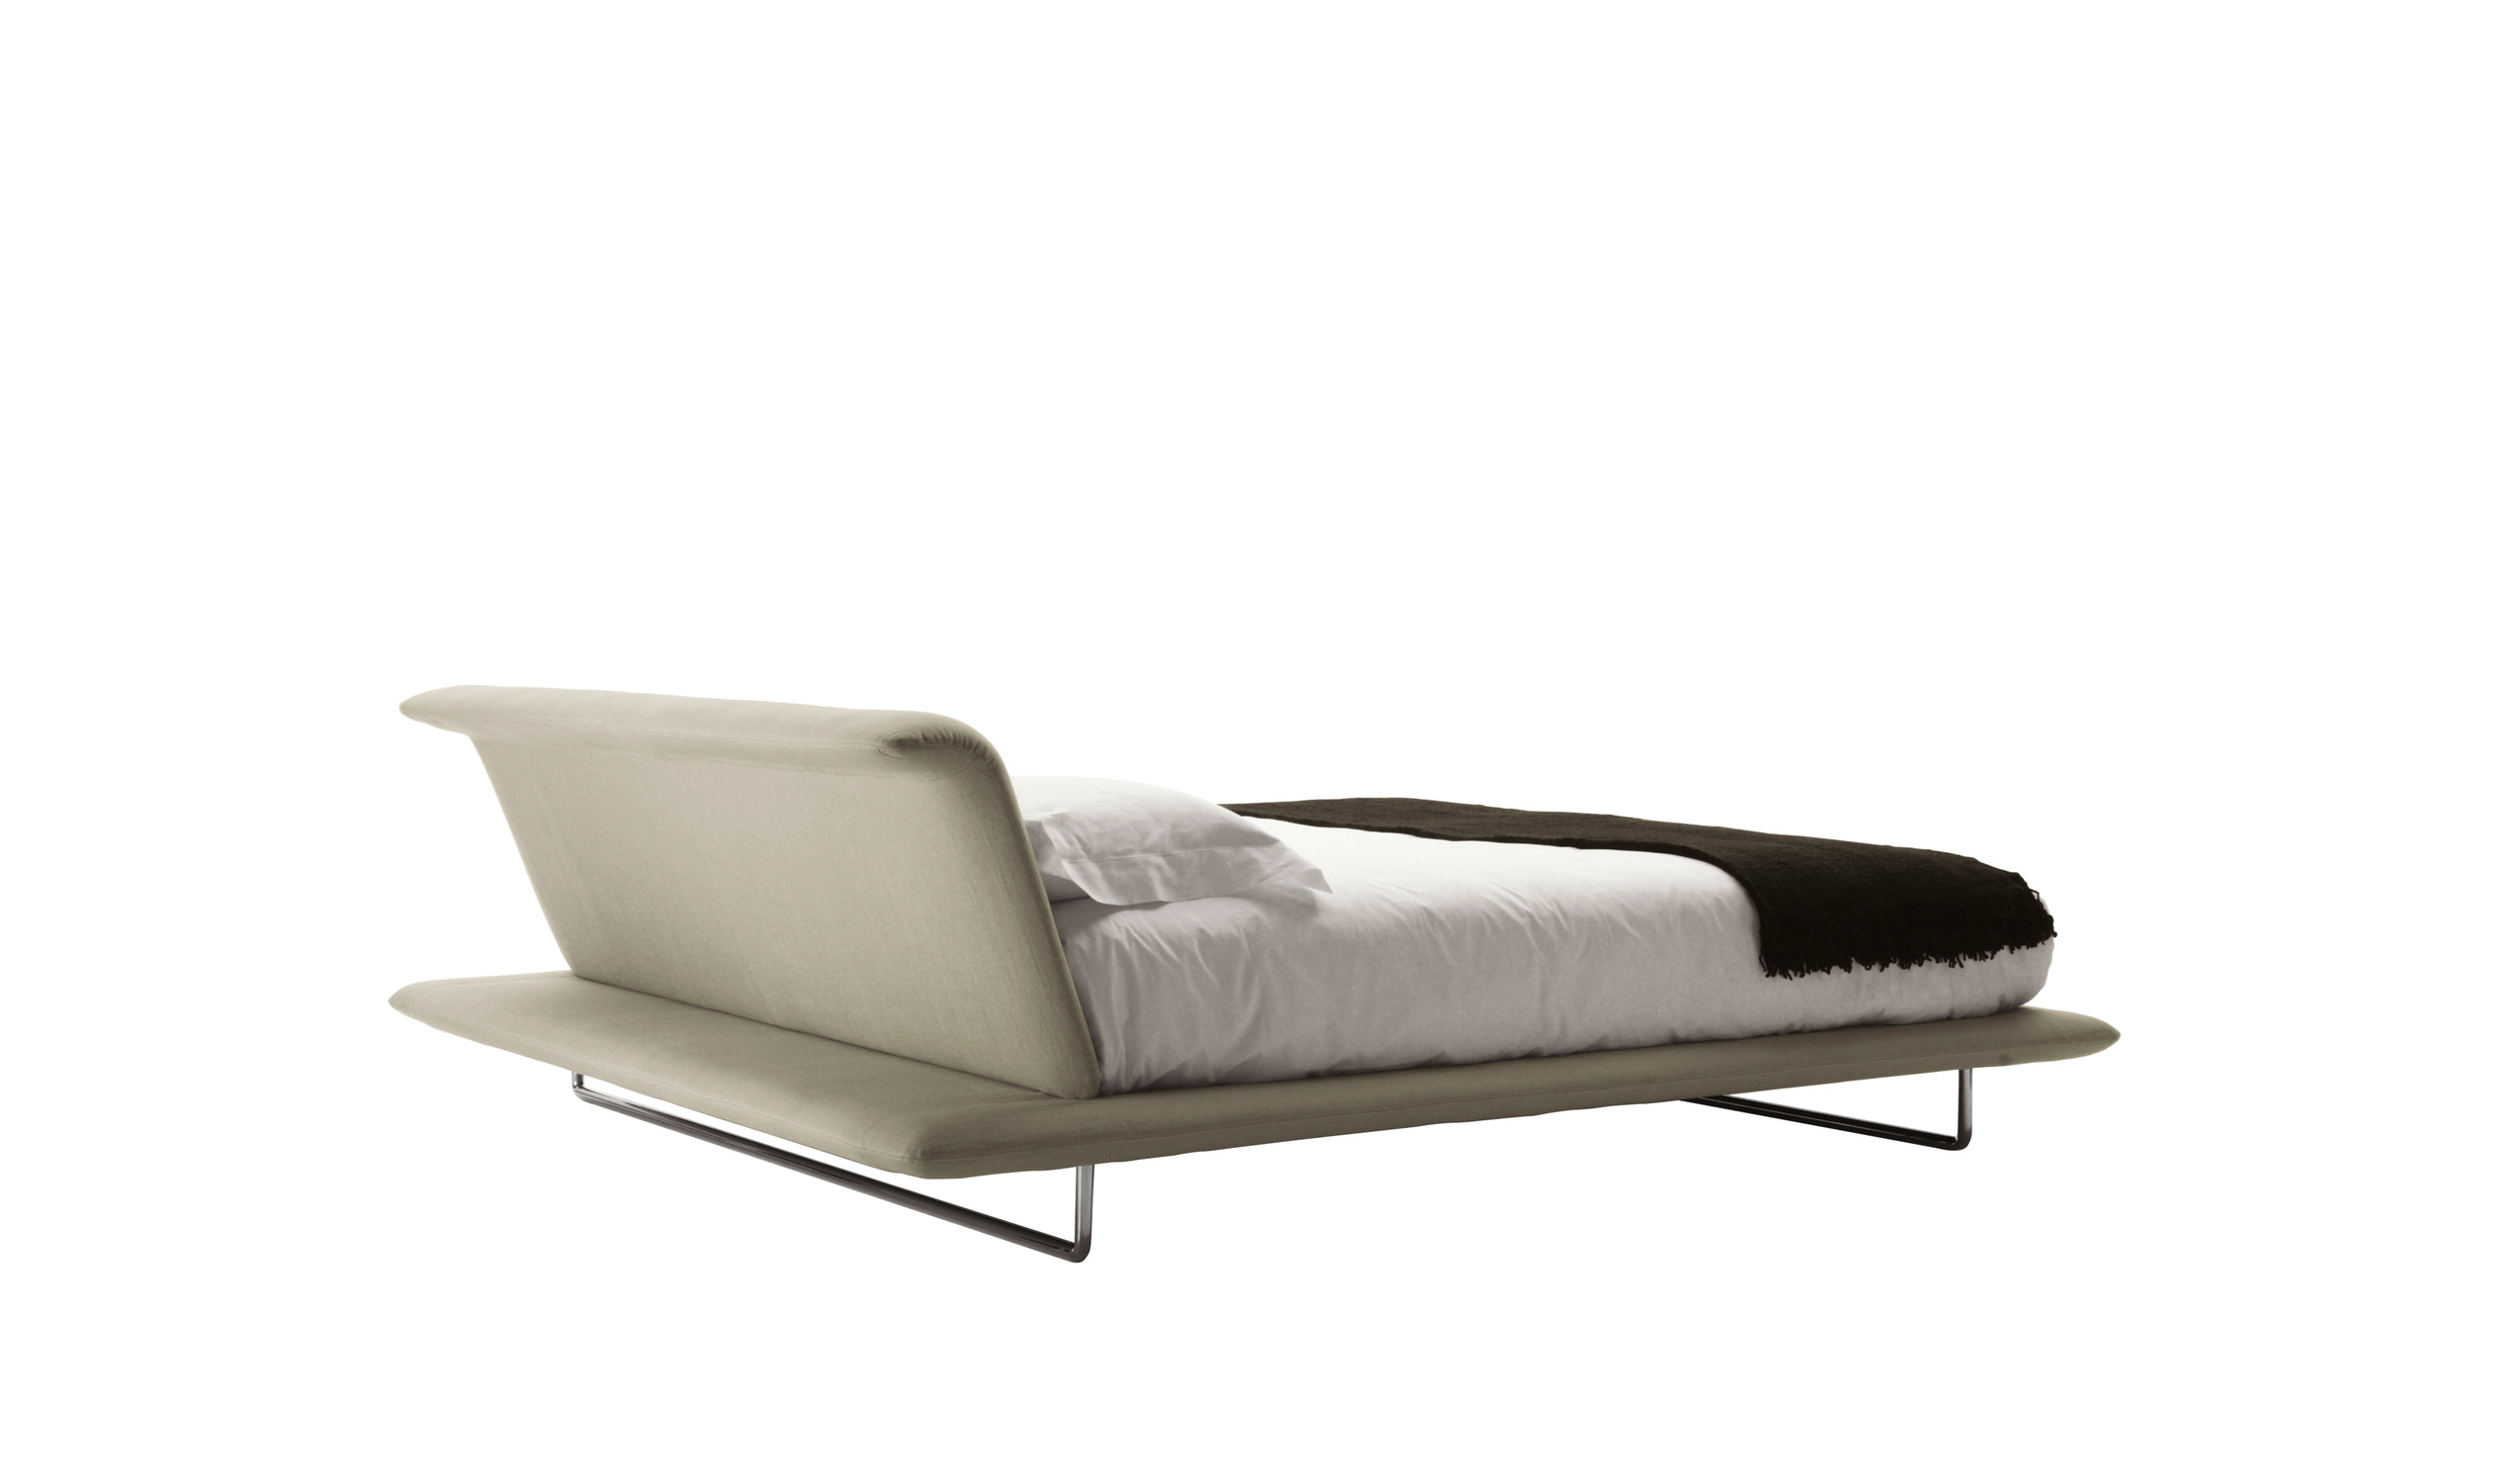 Designer Italian modern beds - Siena Beds 1